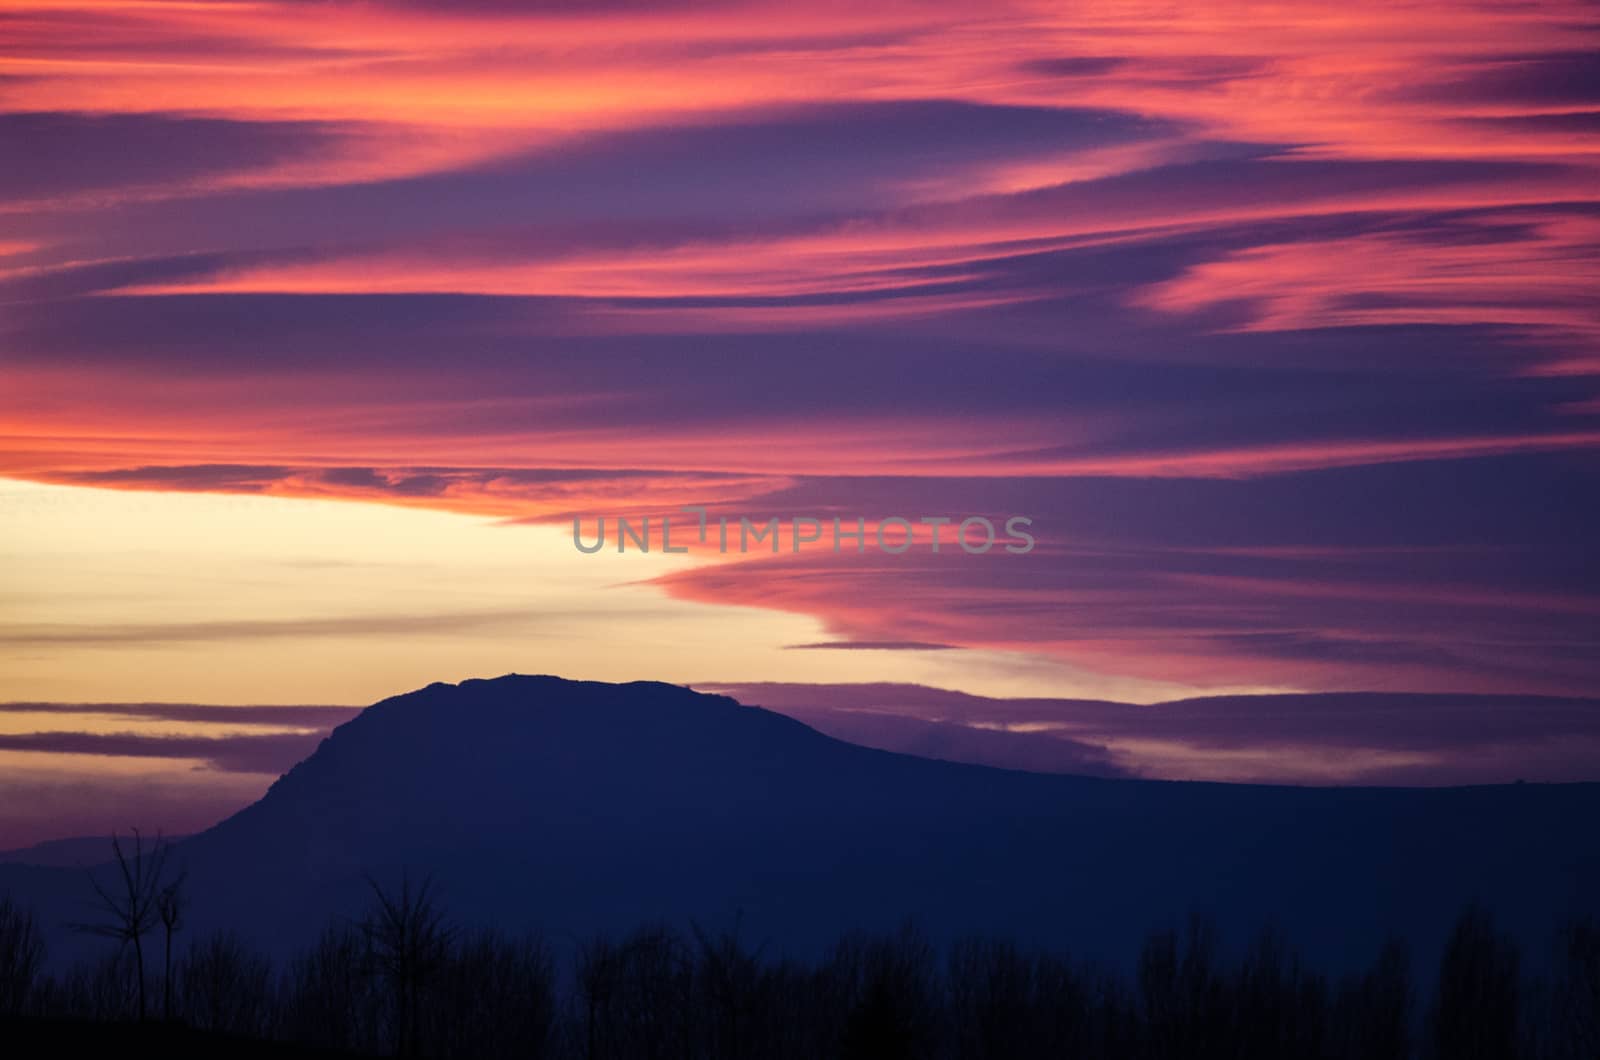 Orange and purple fluffy clouds at sunset over Etxauri s peak at Navarra, Spain